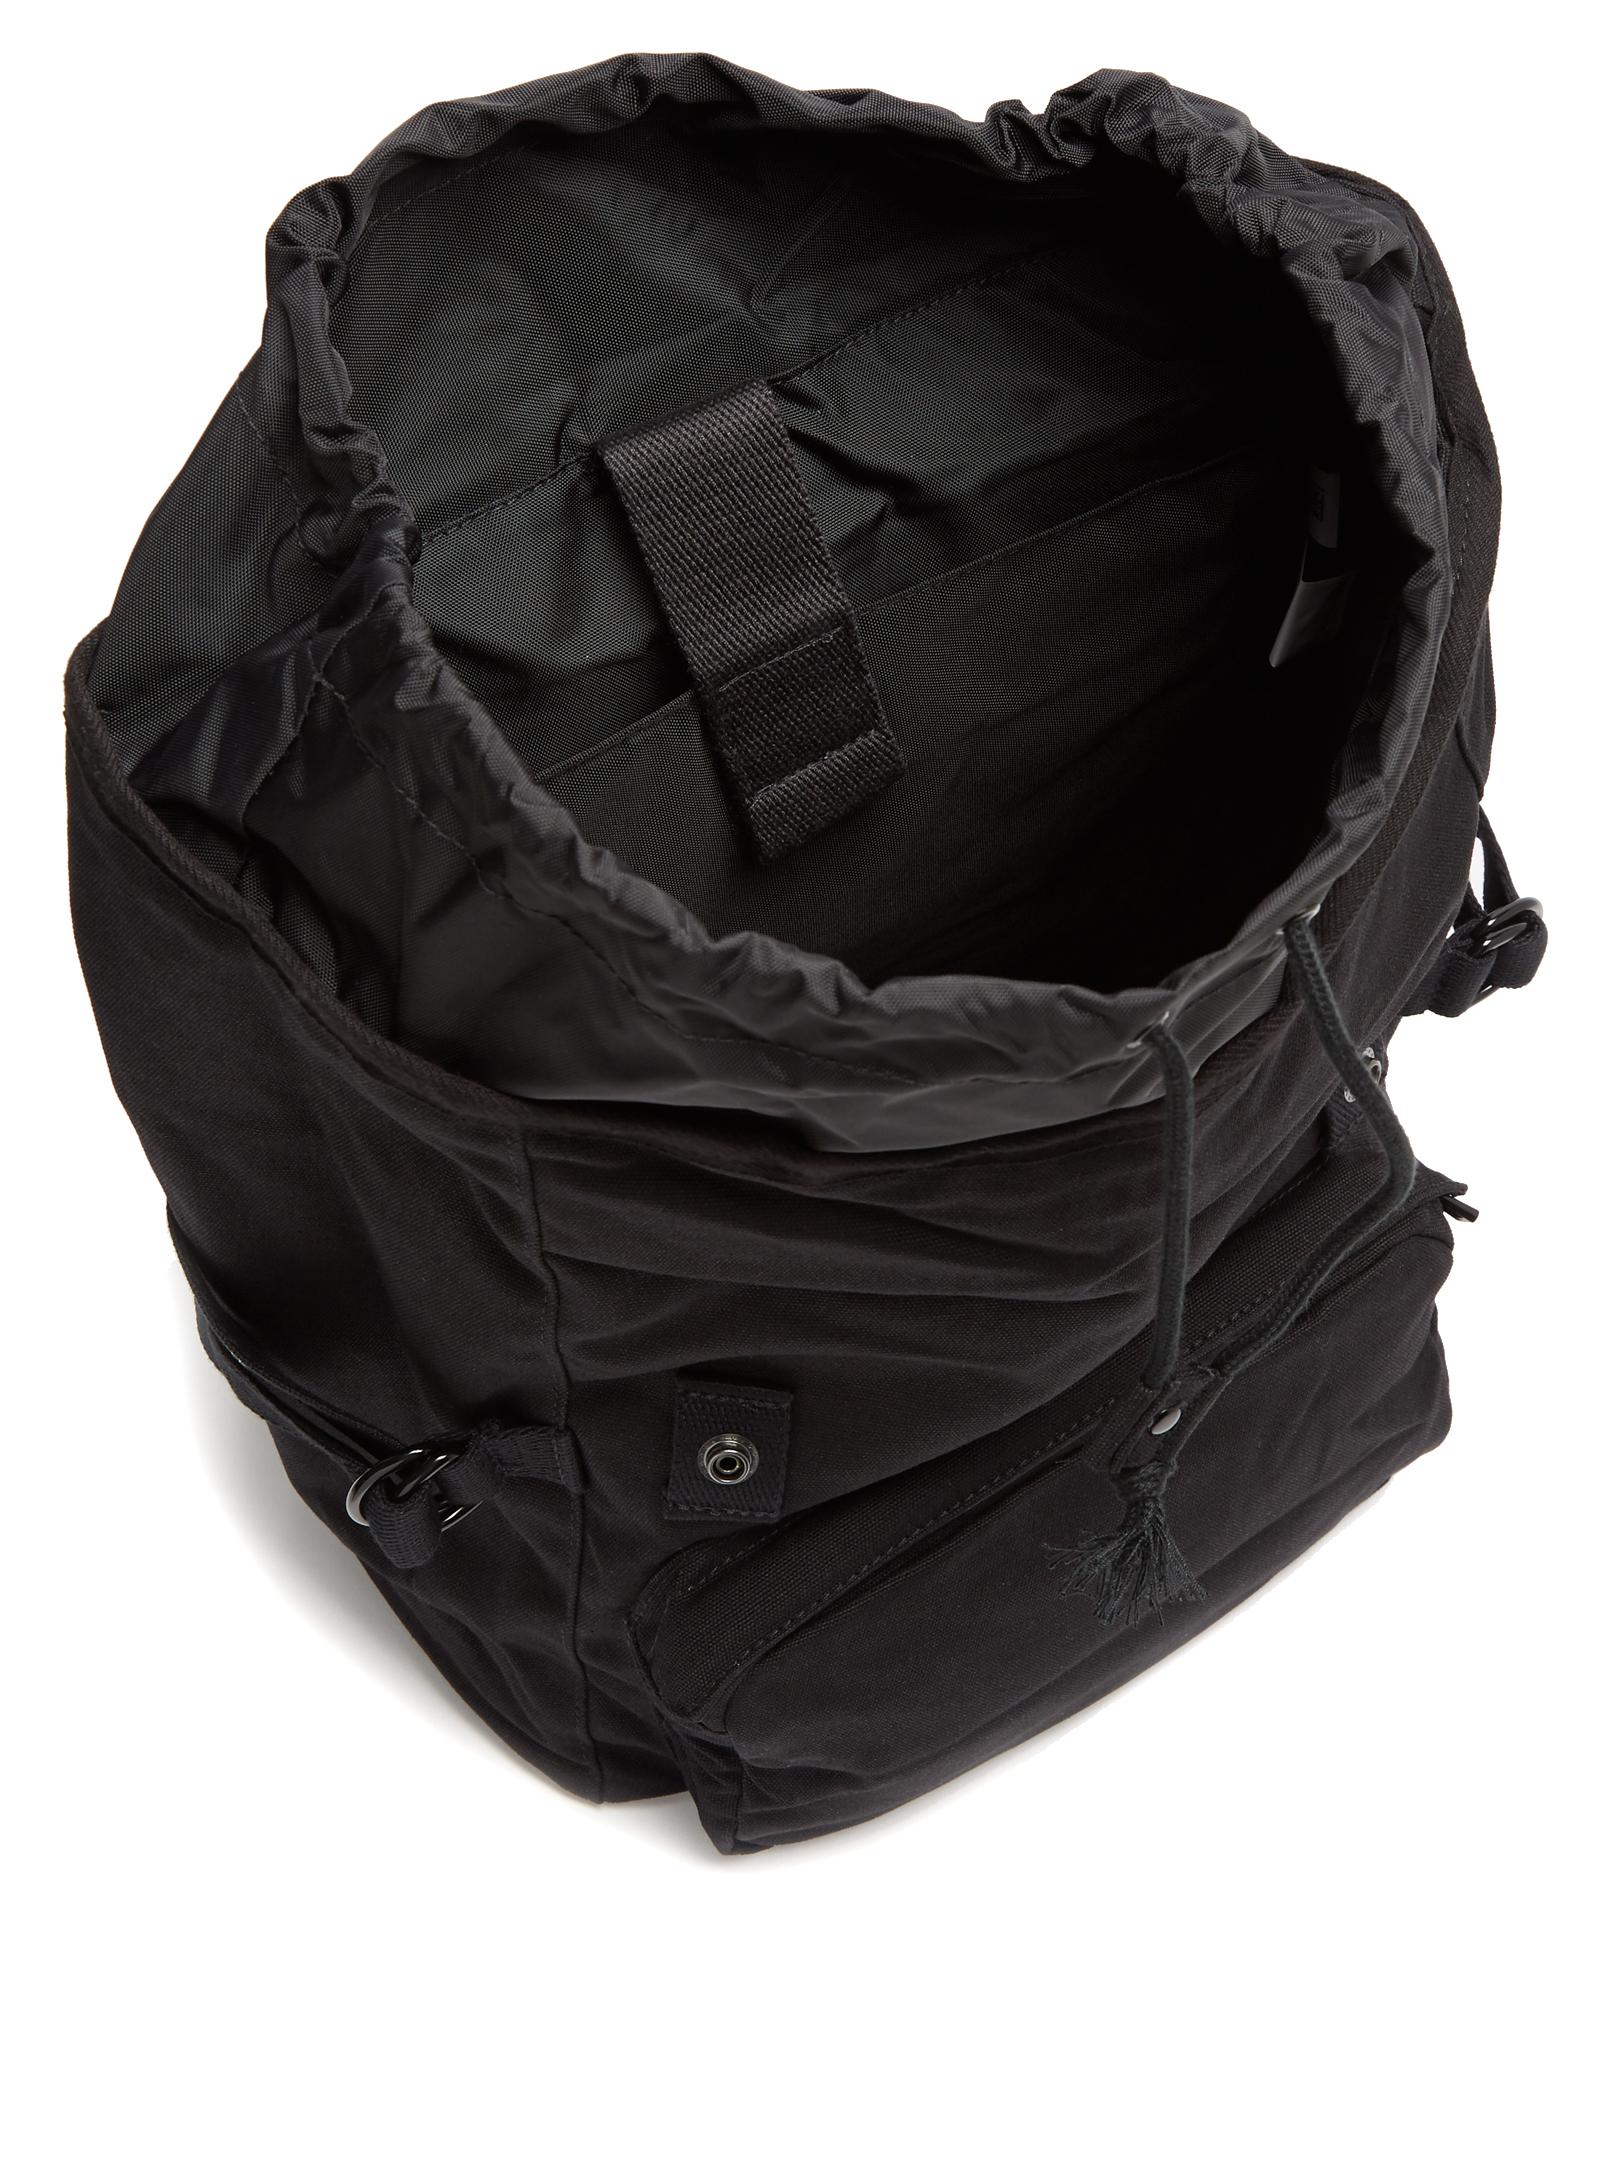 Eastpak x Raf Simons University Life On Mars XS Backpack - Black Backpacks,  Handbags - WEAST20086